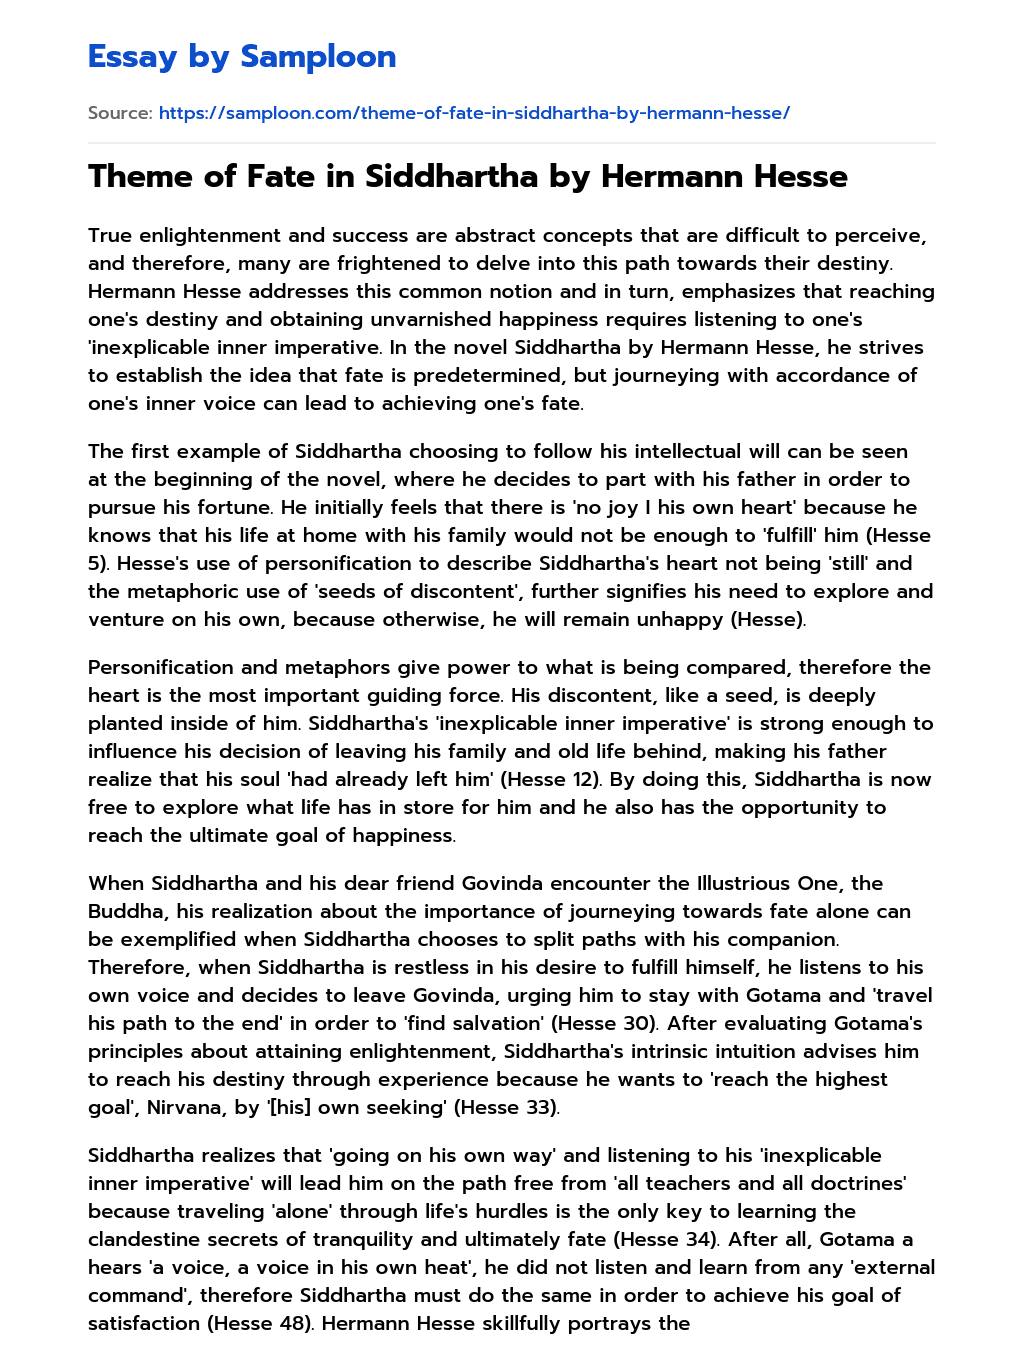 Theme of Fate in Siddhartha by Hermann Hesse essay